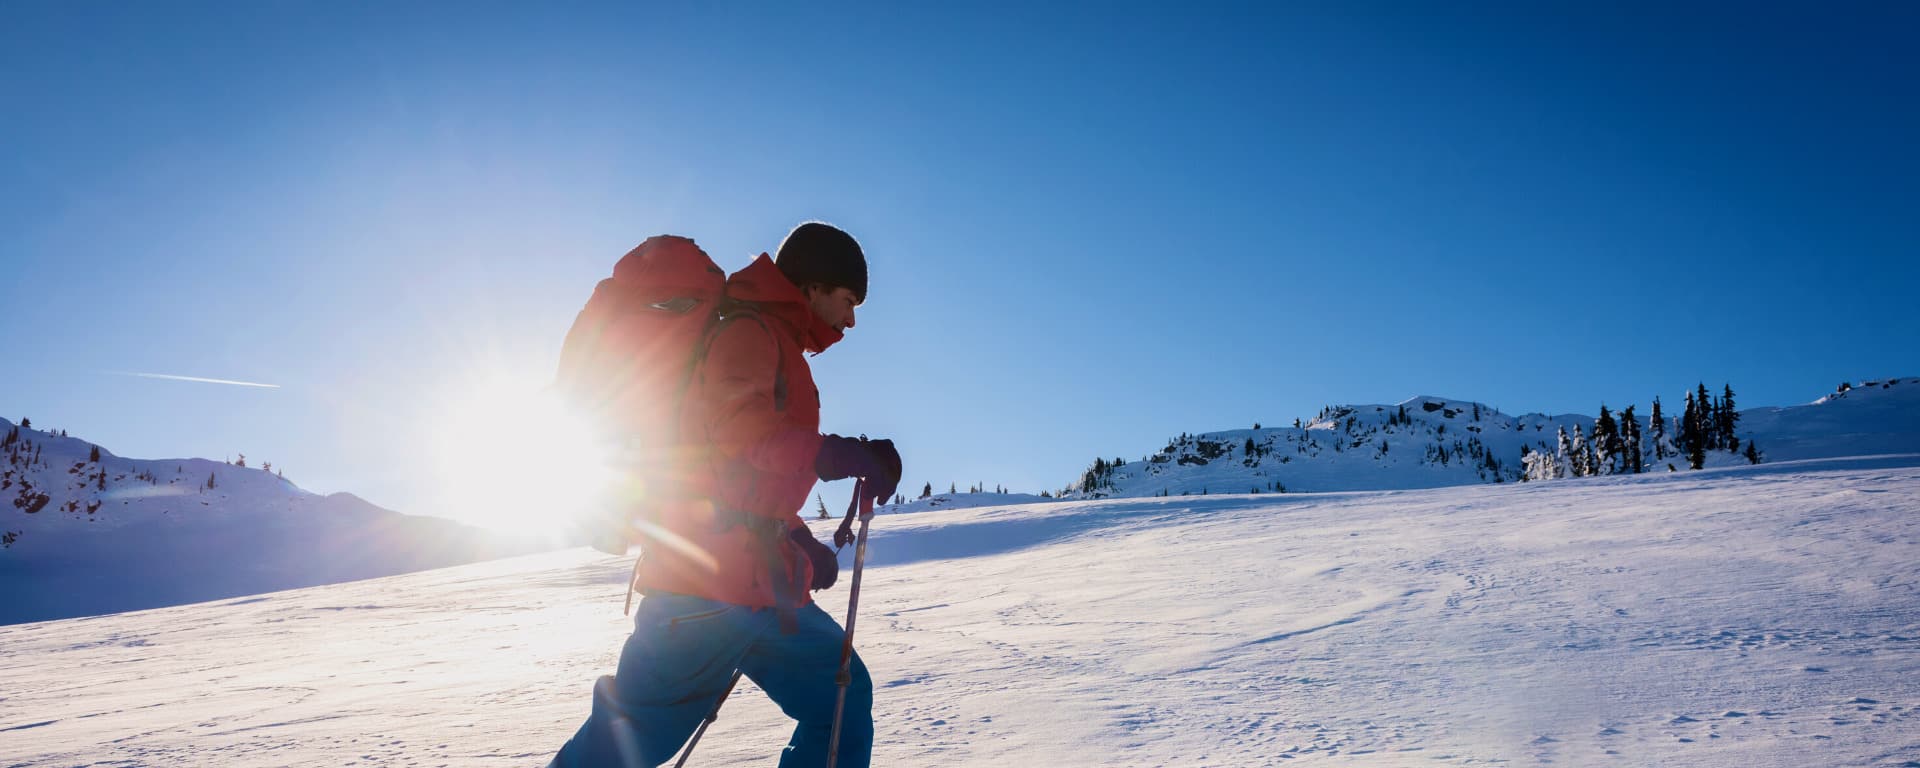 Best Ski Backpacks - Feature Image